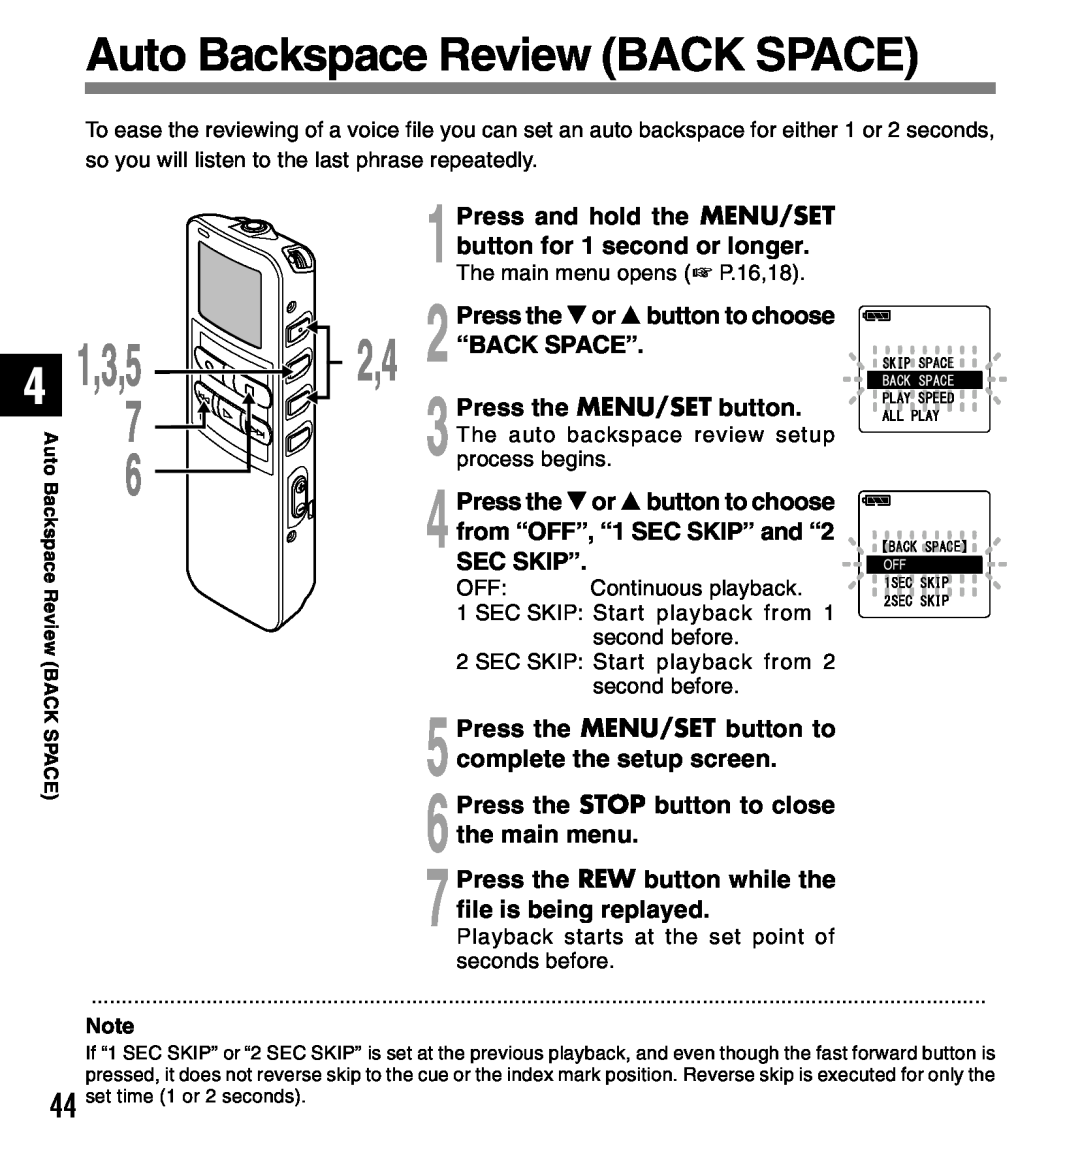 Olympus manual Auto Backspace Review BACK SPACE, 1,3,5, “Back Space”, 2,4 2Press the MENU/SET button, Sec Skip” 